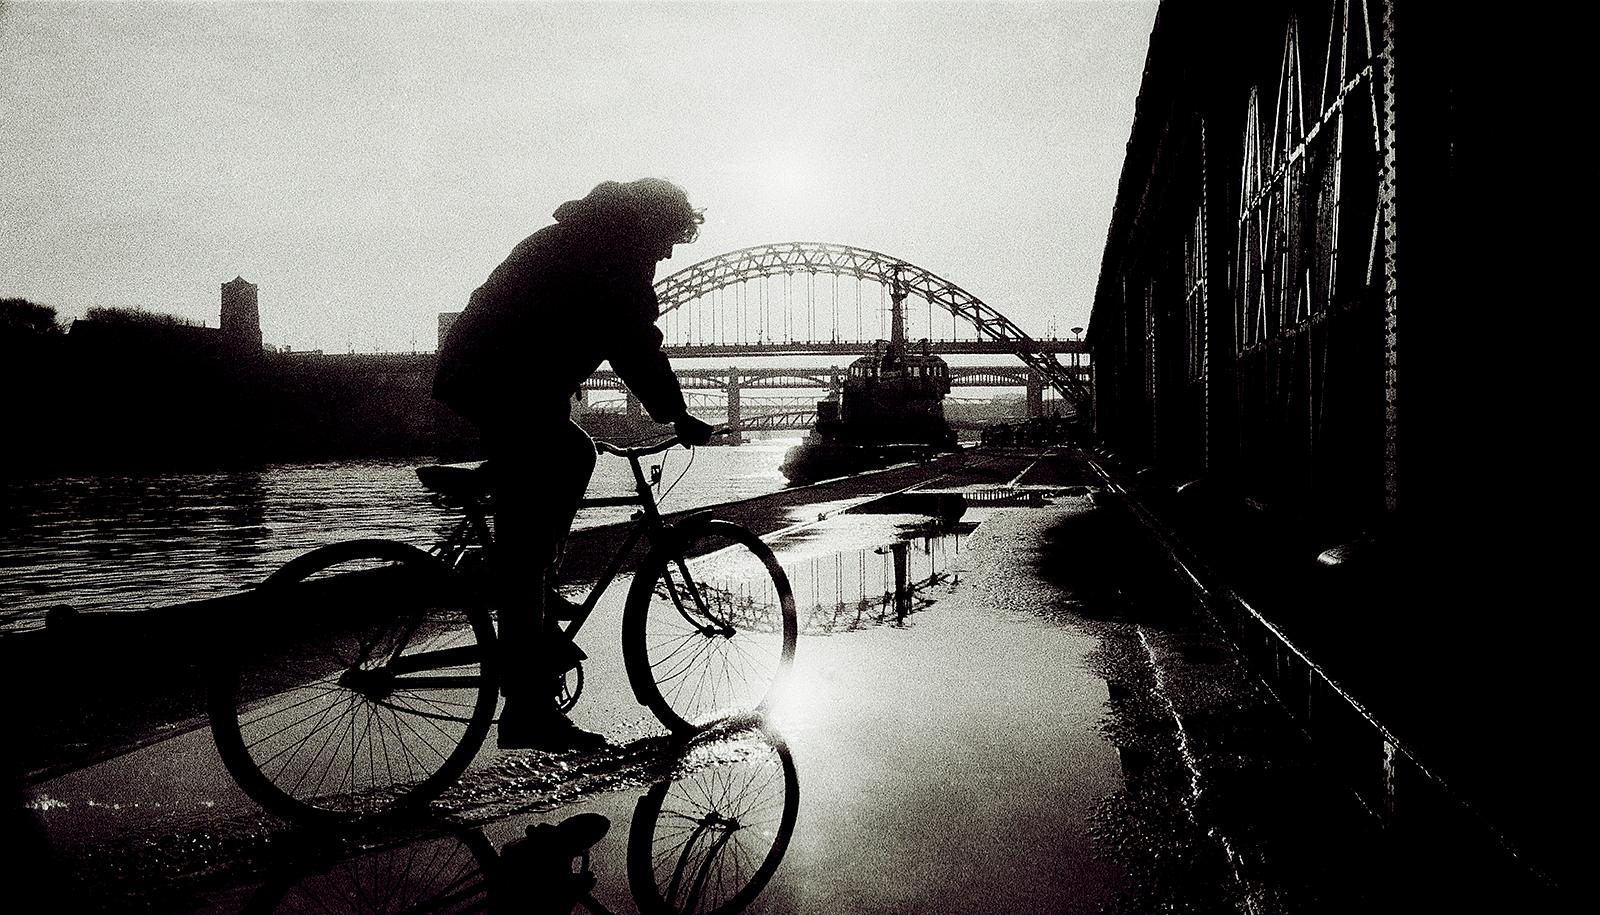 Ian Sanderson Landscape Photograph - City Landscape print, black white, Contemporary, Analogue photo - Newcastle 